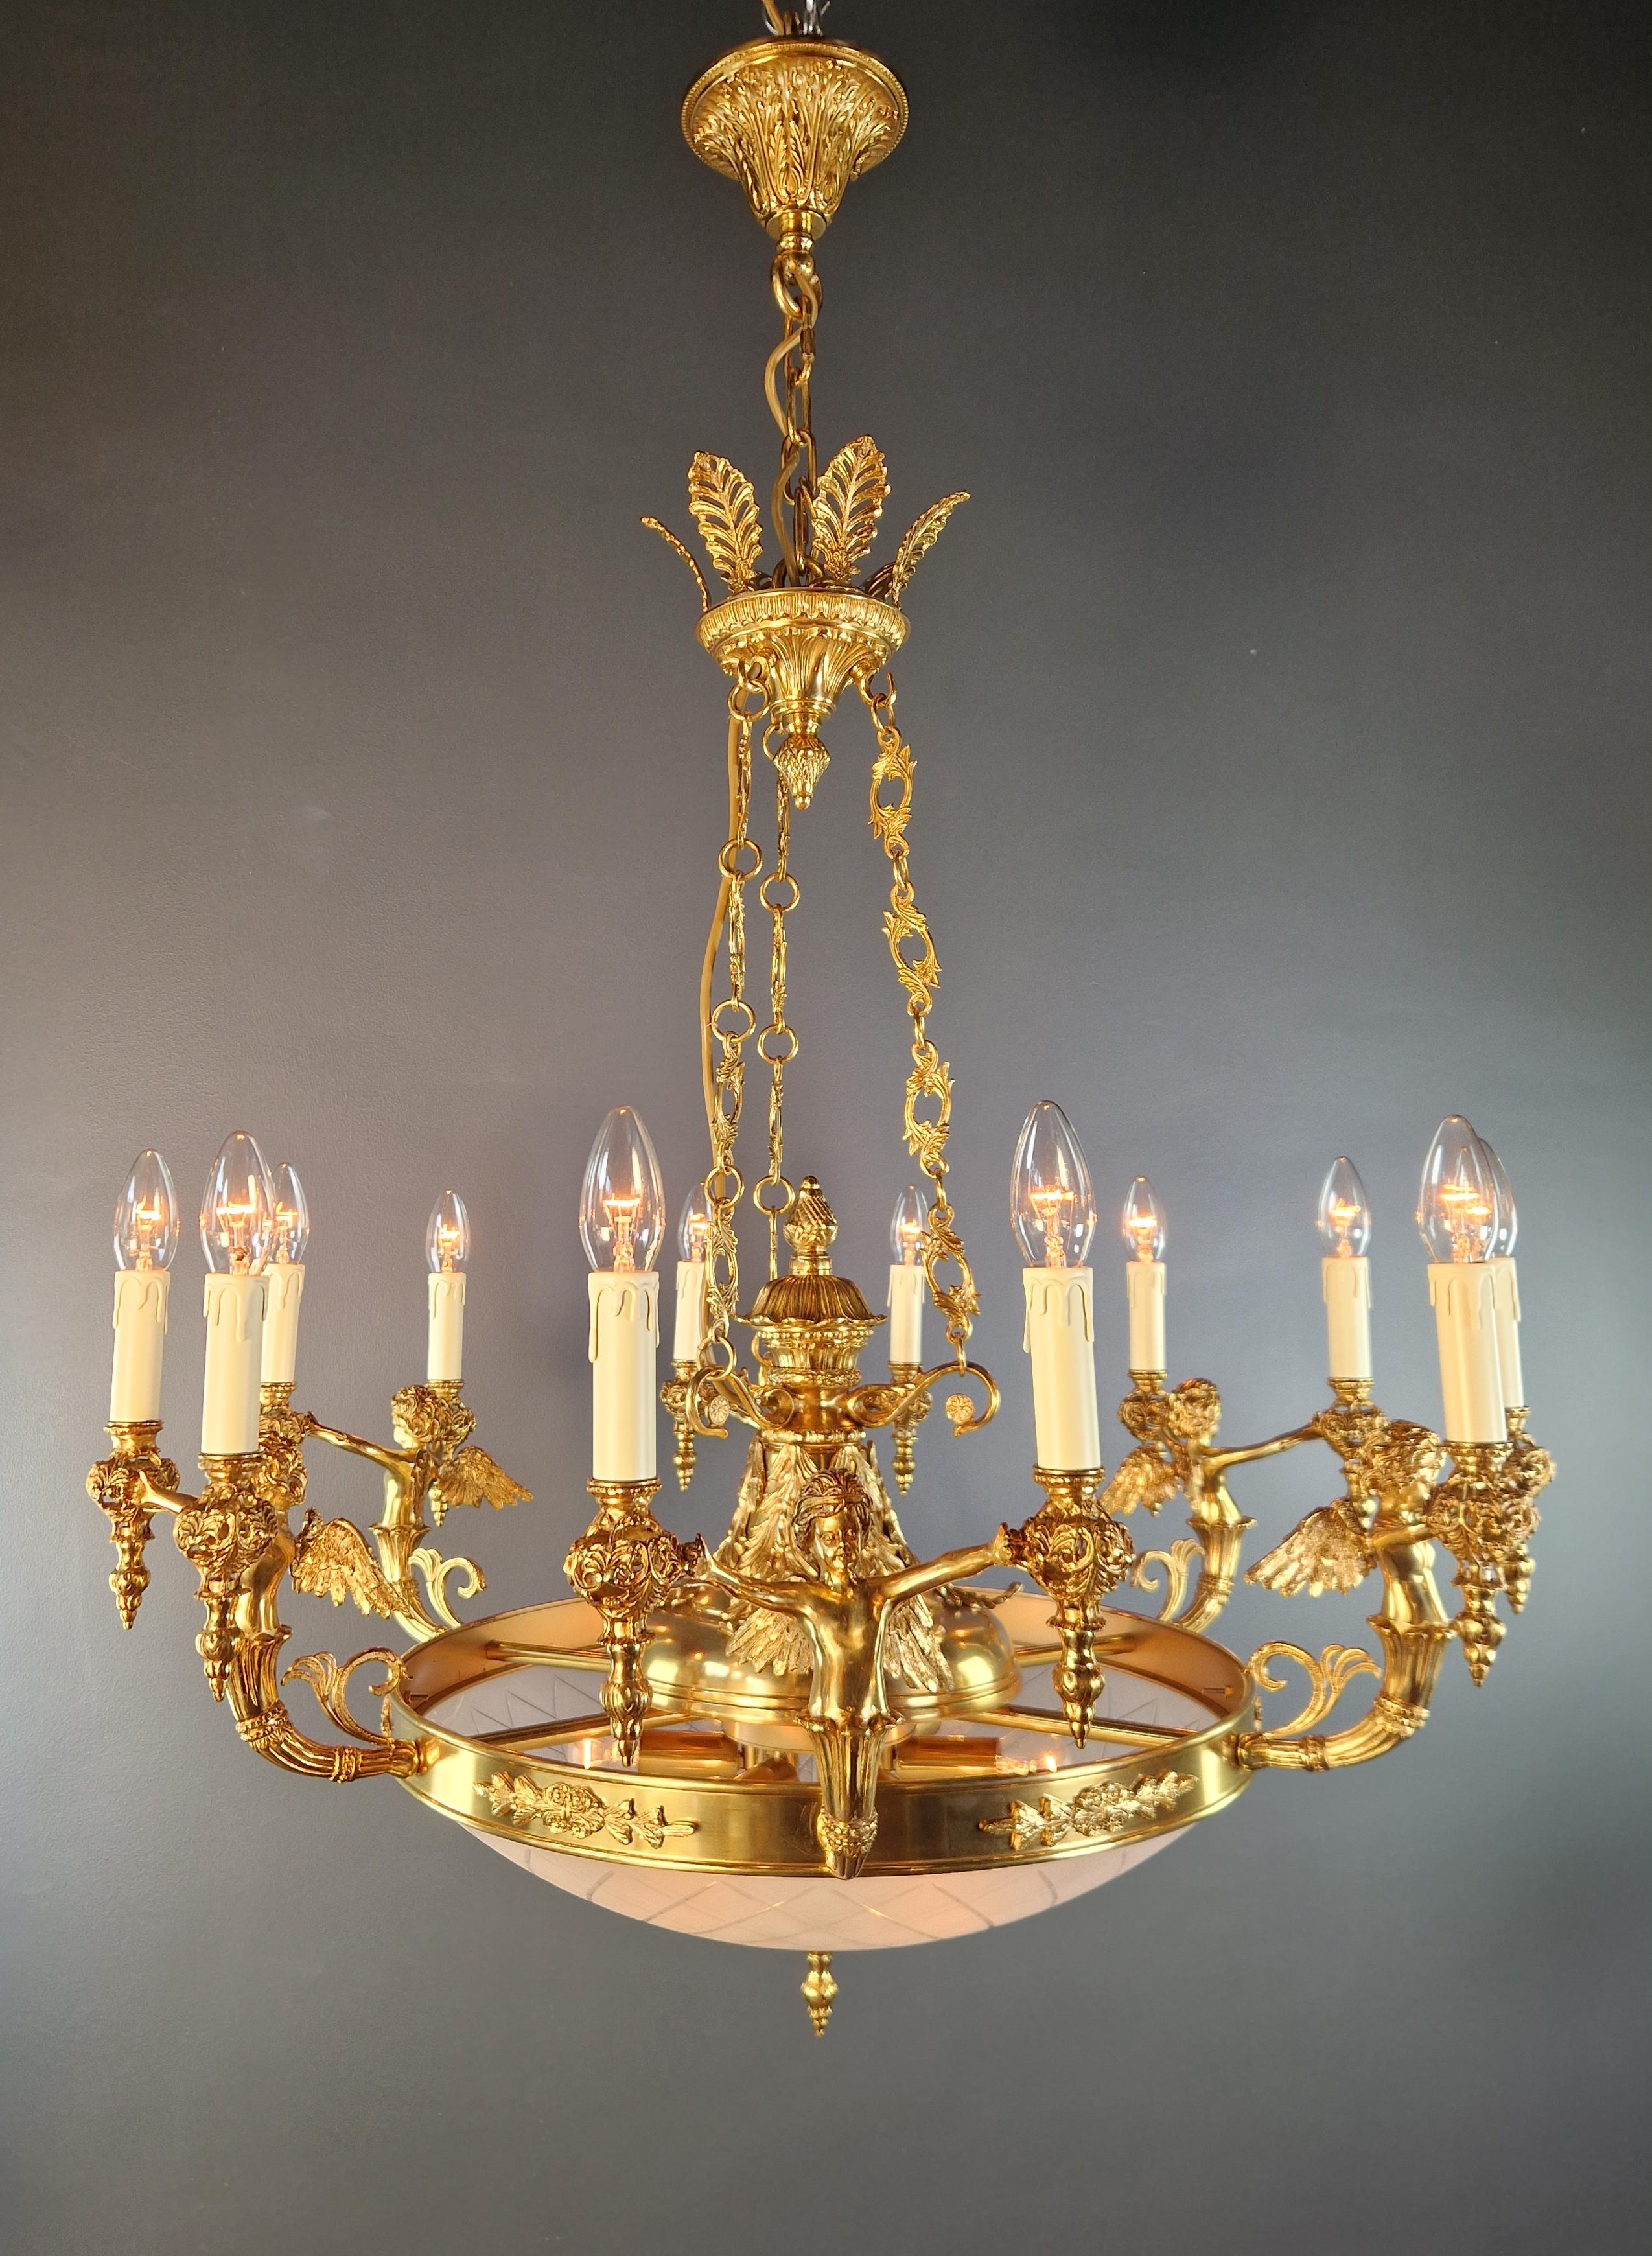 Angel Brass Empire Chandelier Lustre Lamp Antique Gold In New Condition For Sale In Berlin, DE